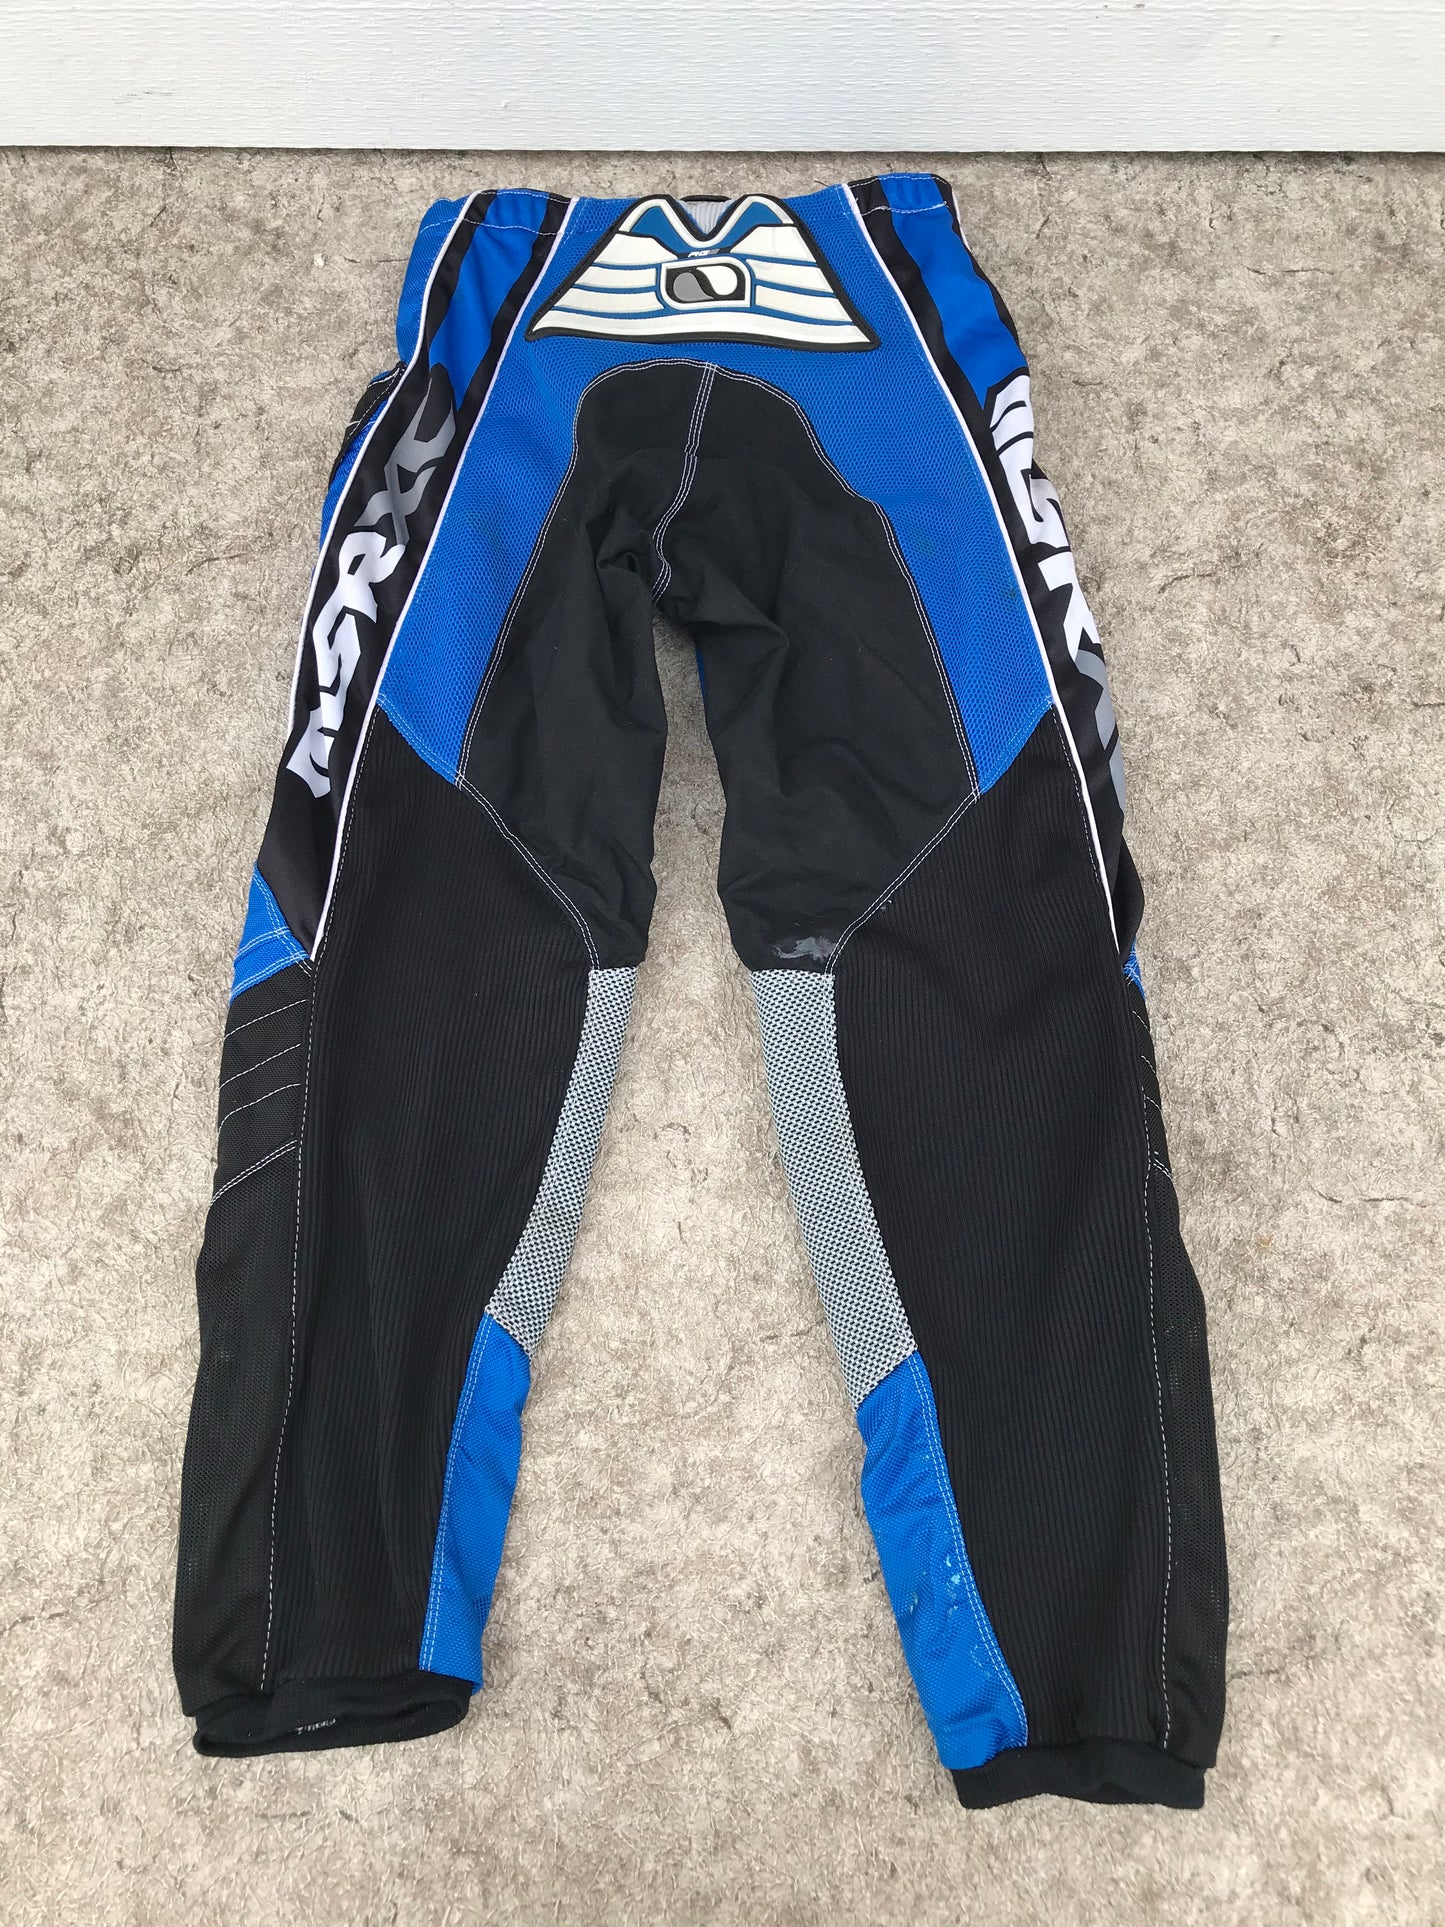 Motocross BMX Dirt Bike Pants Men's Size 30 inch Small  MSR Blue Black As New